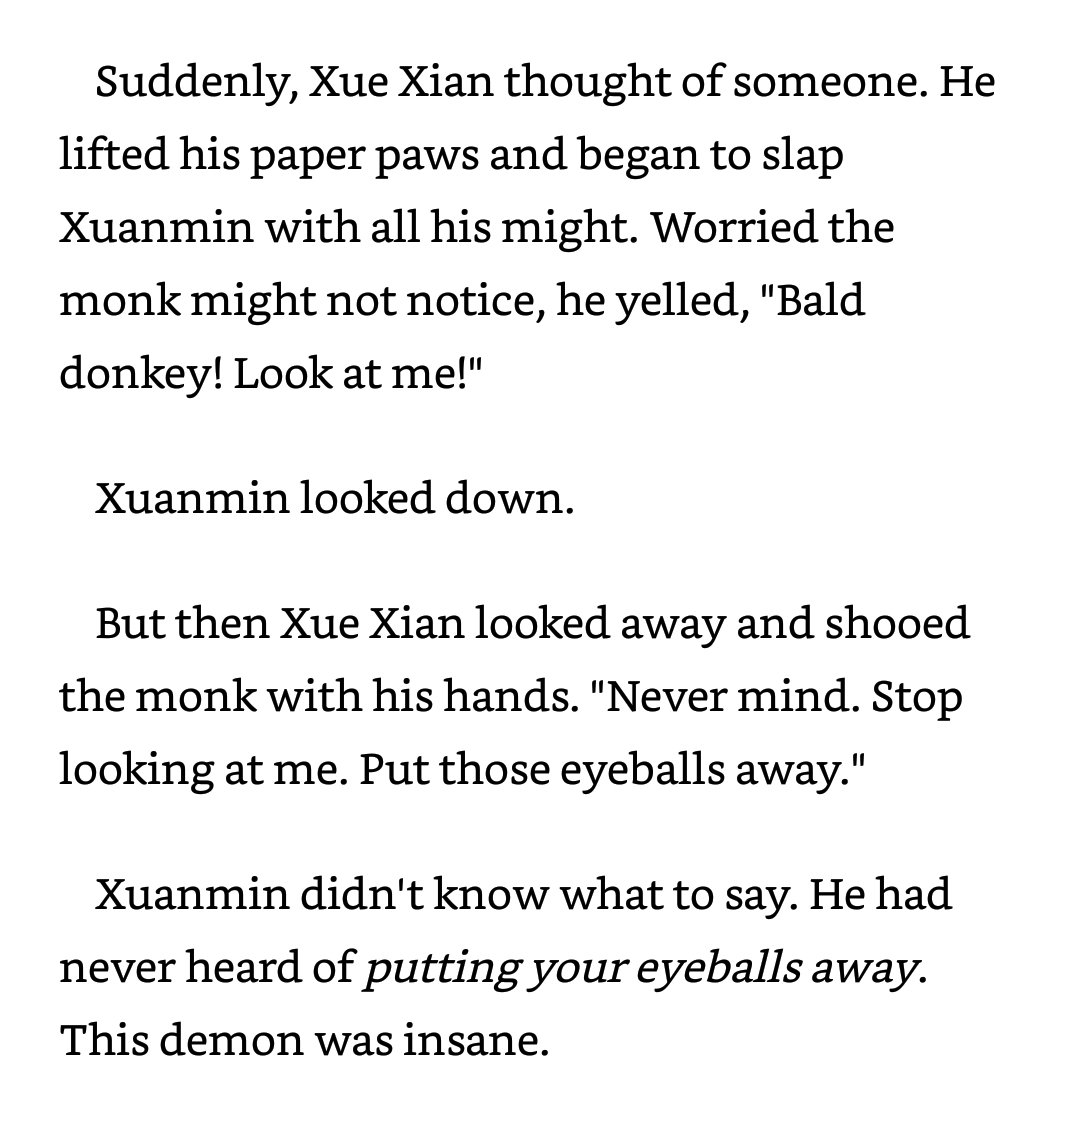 Xuan Min just burn his annoying ass